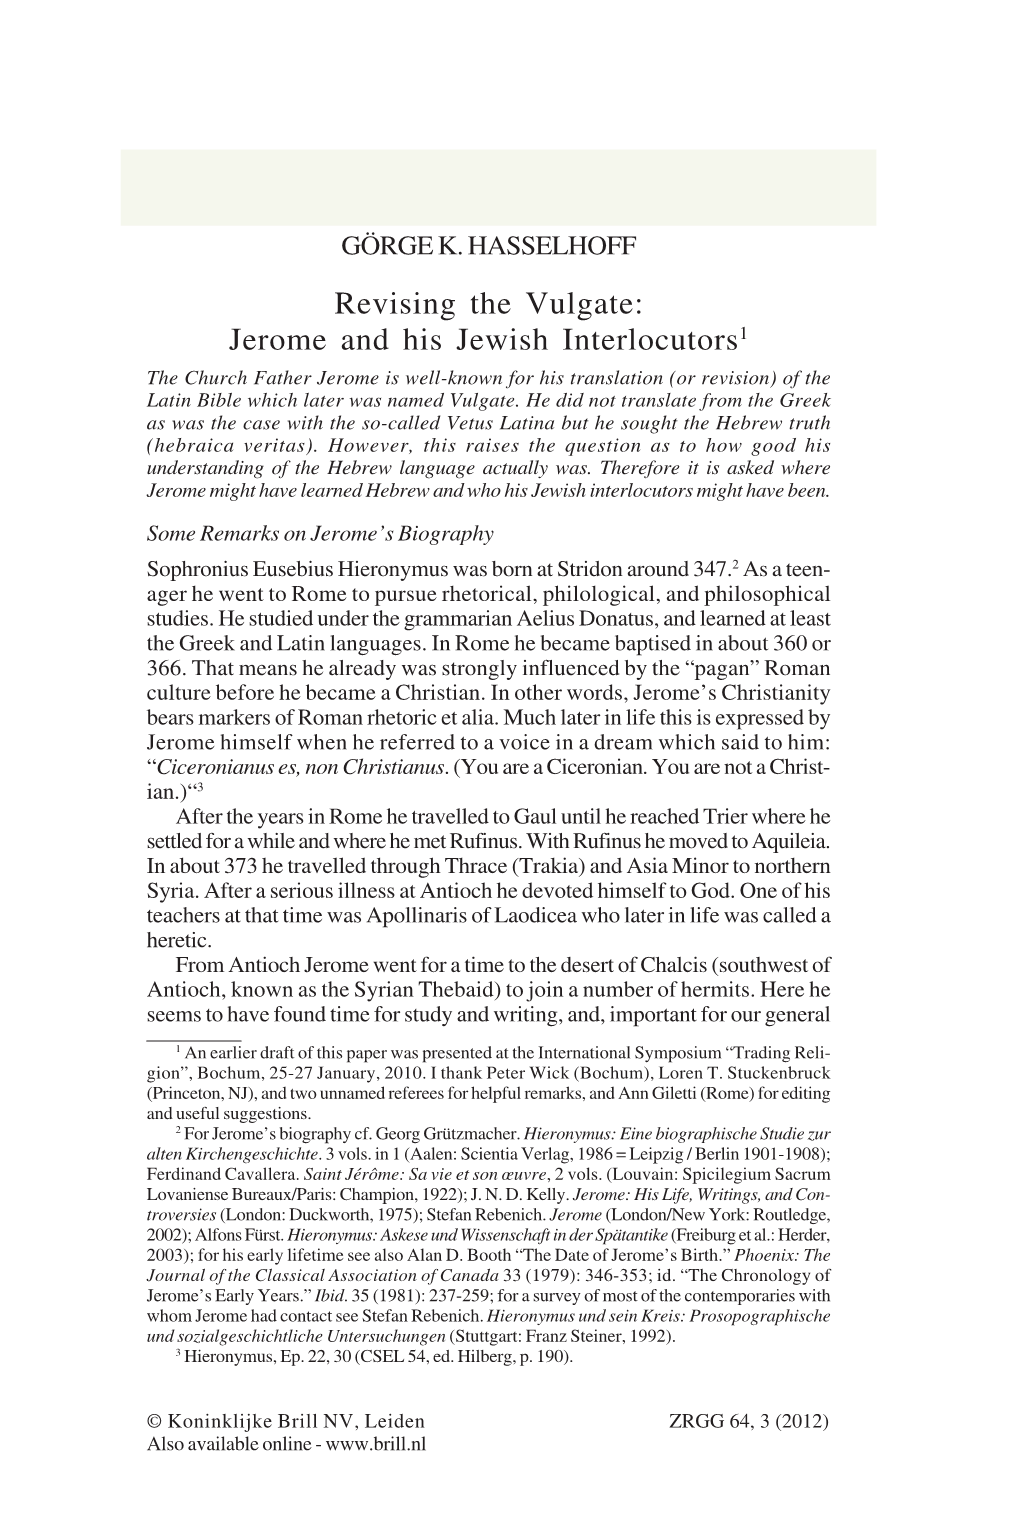 Revising the Vulgate: Jerome and His Jewish Interlocutors1